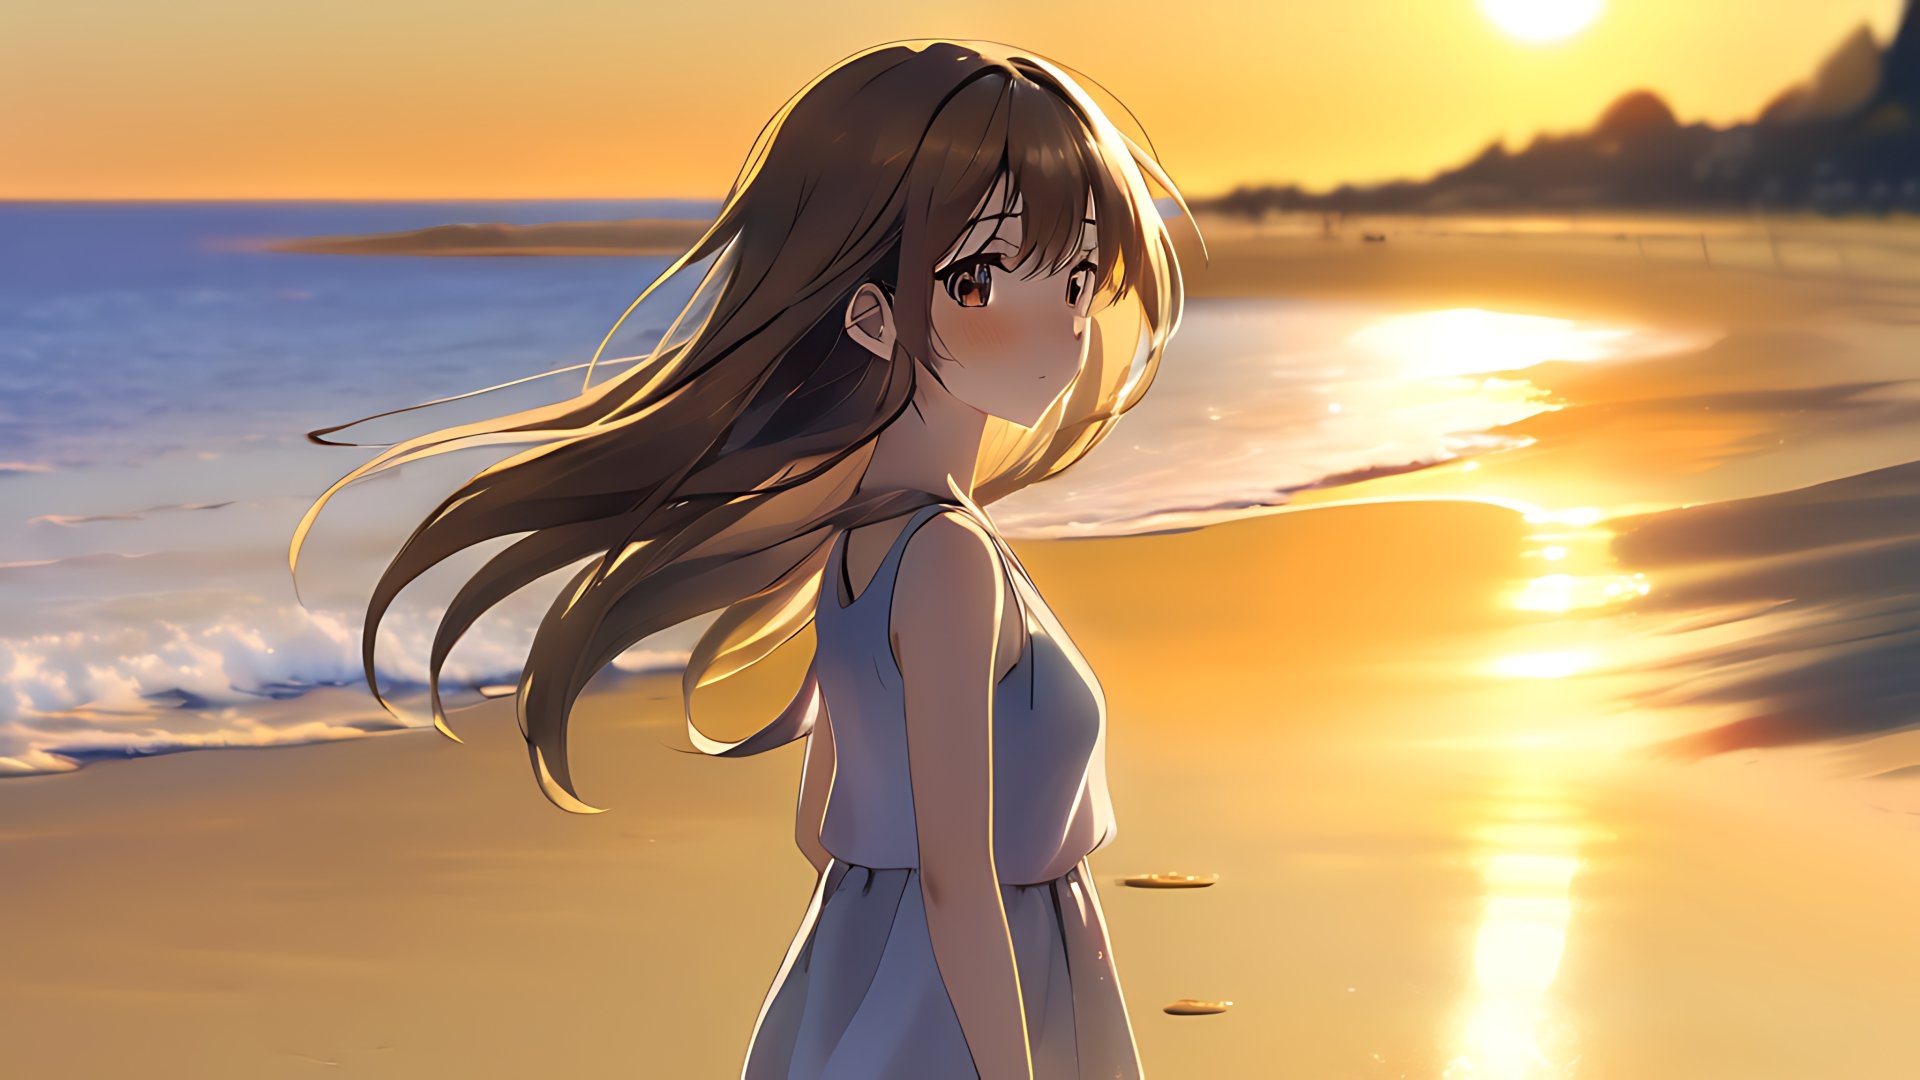 anime girl wallpaper beautiful sunset by lukychandra